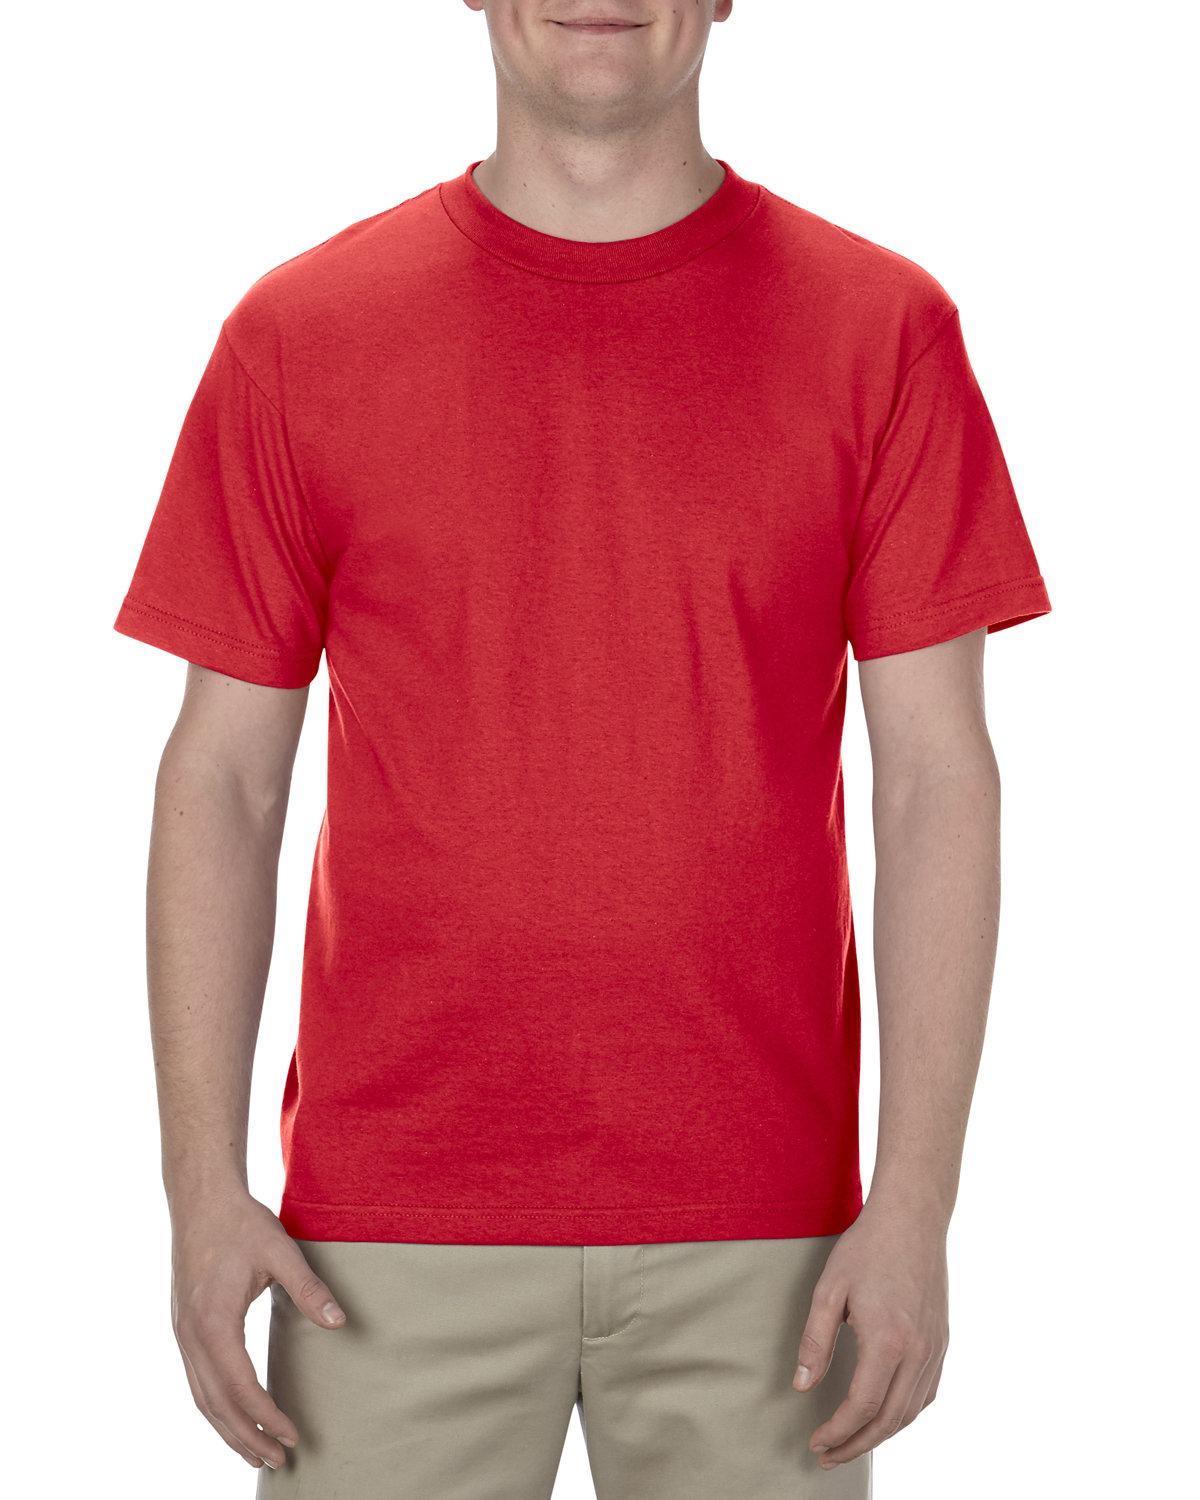 American Apparel Unisex Heavyweight Cotton T-Shirt red 